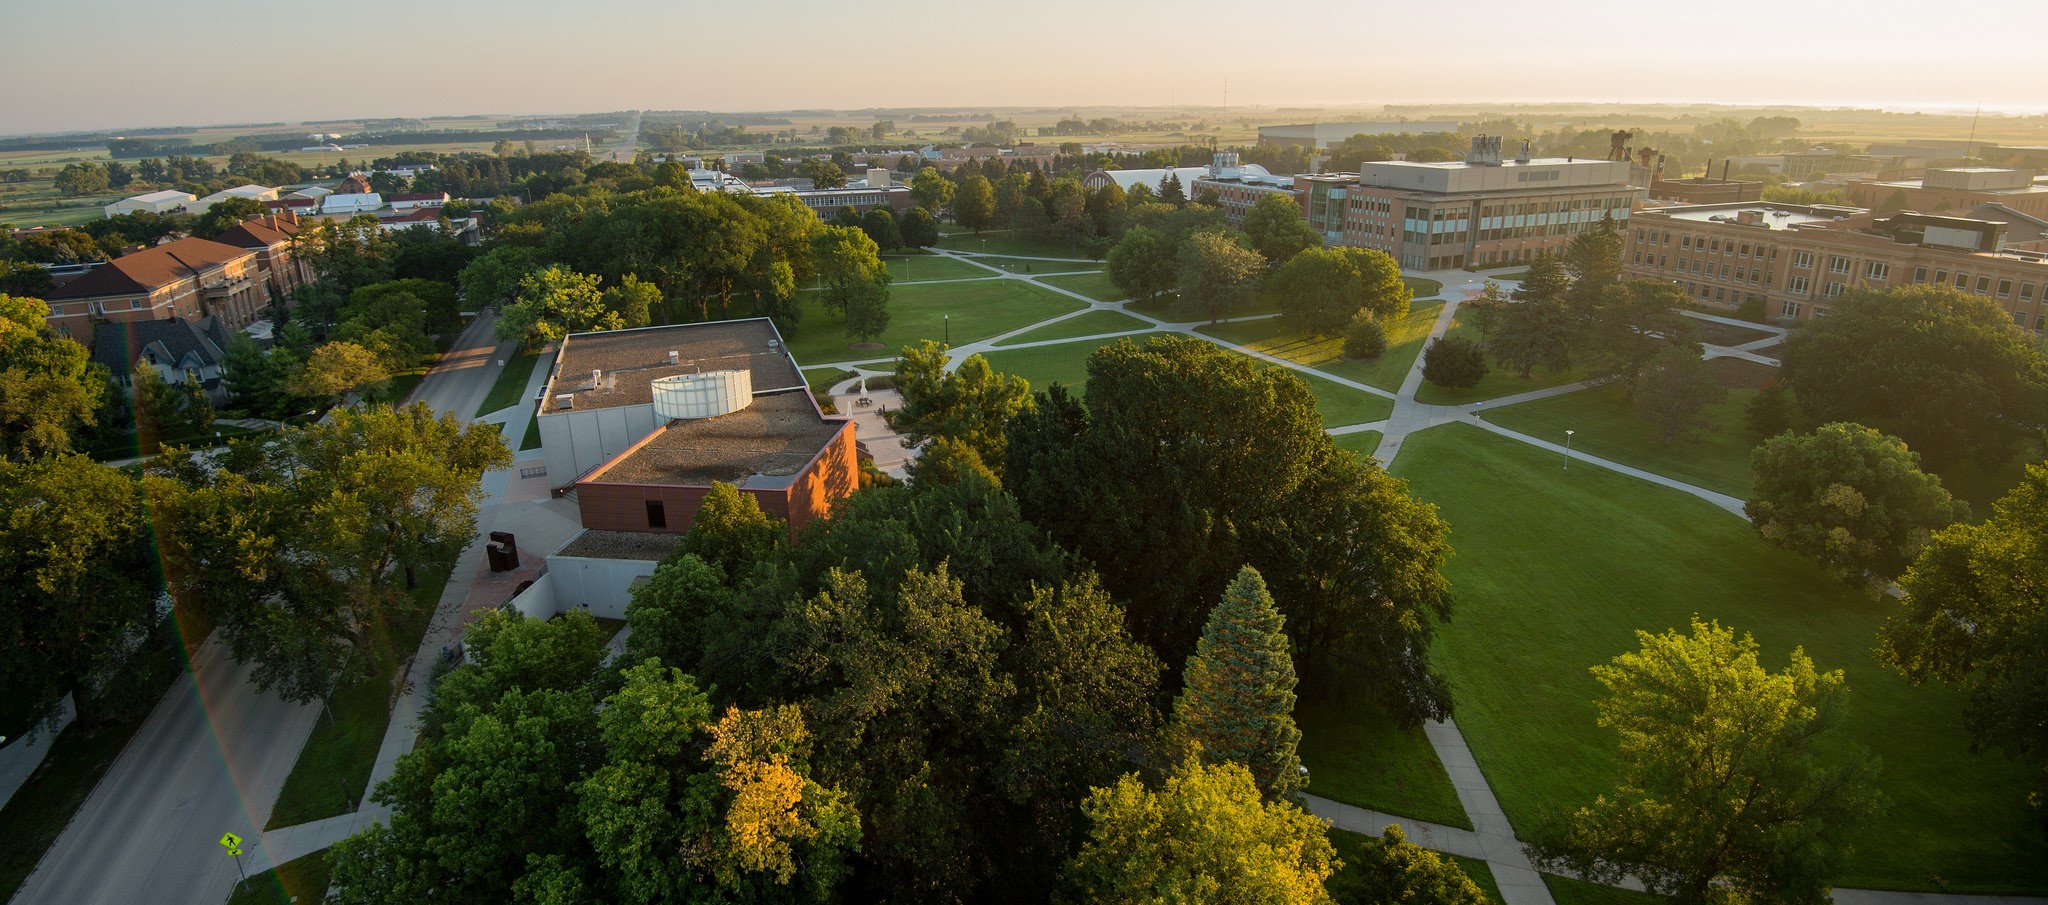 View of SDSU campus